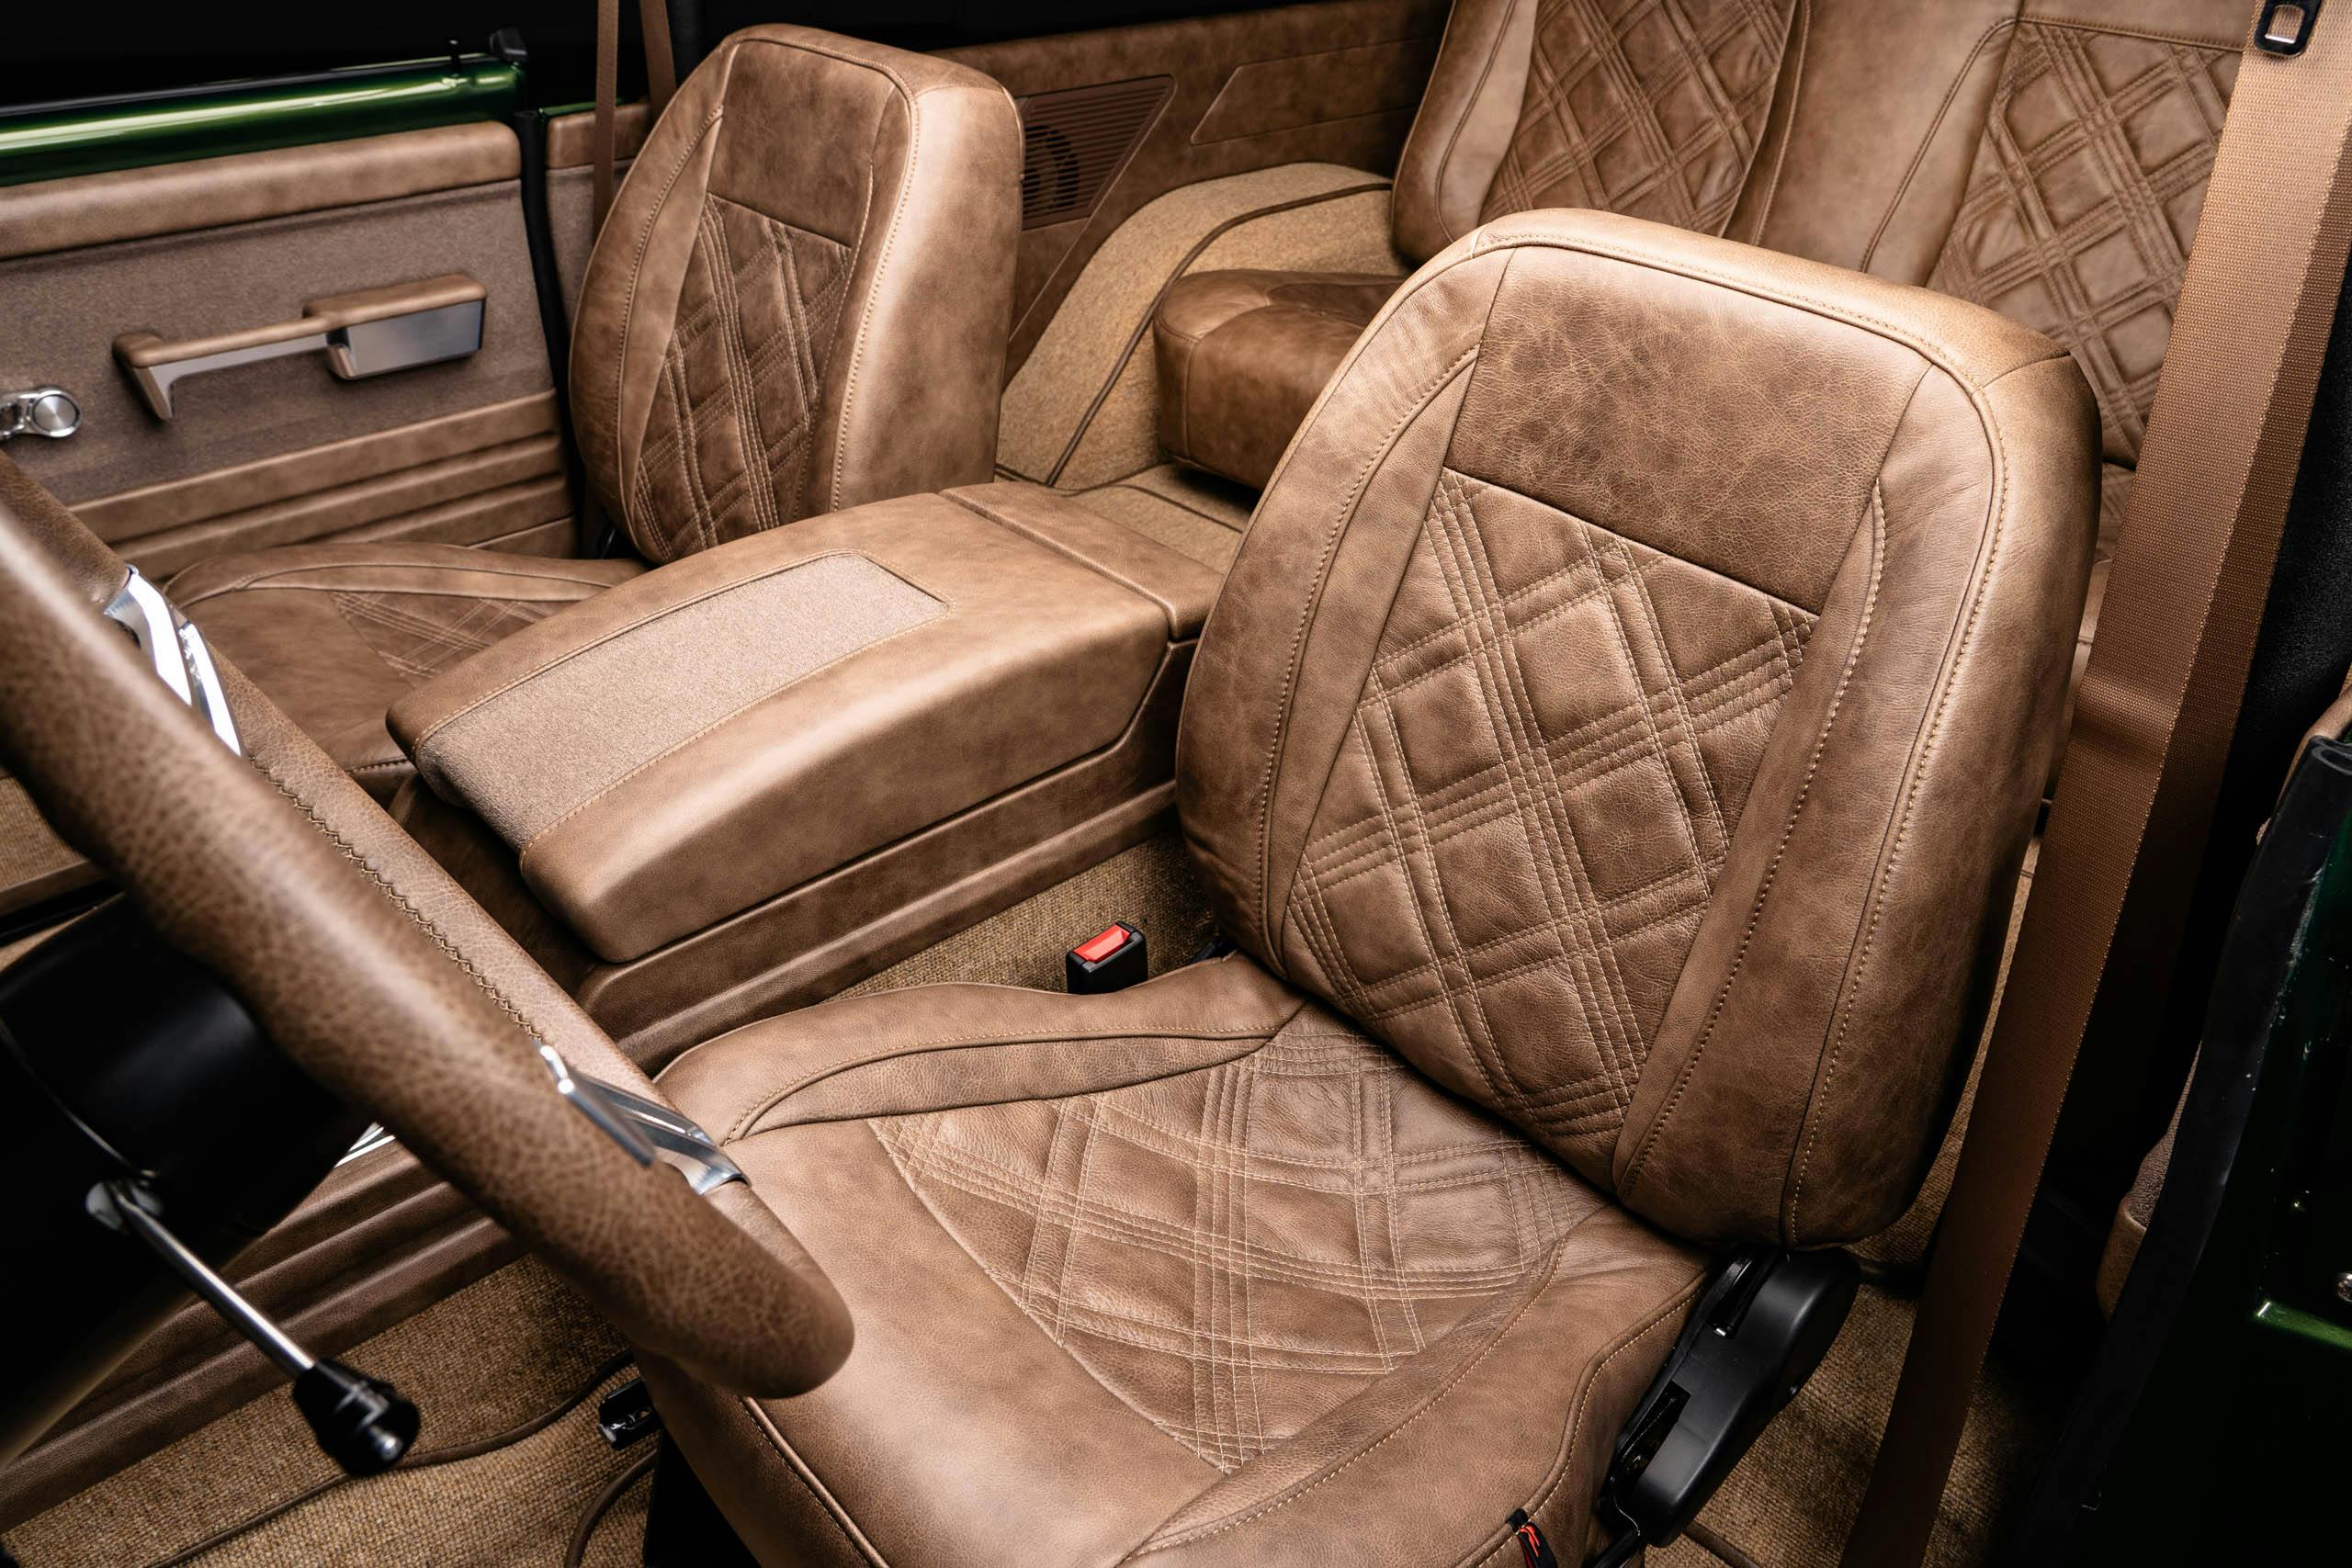 Velocity Modern Classics K5 Chevy Blazer restomod interior front seats from driver's side